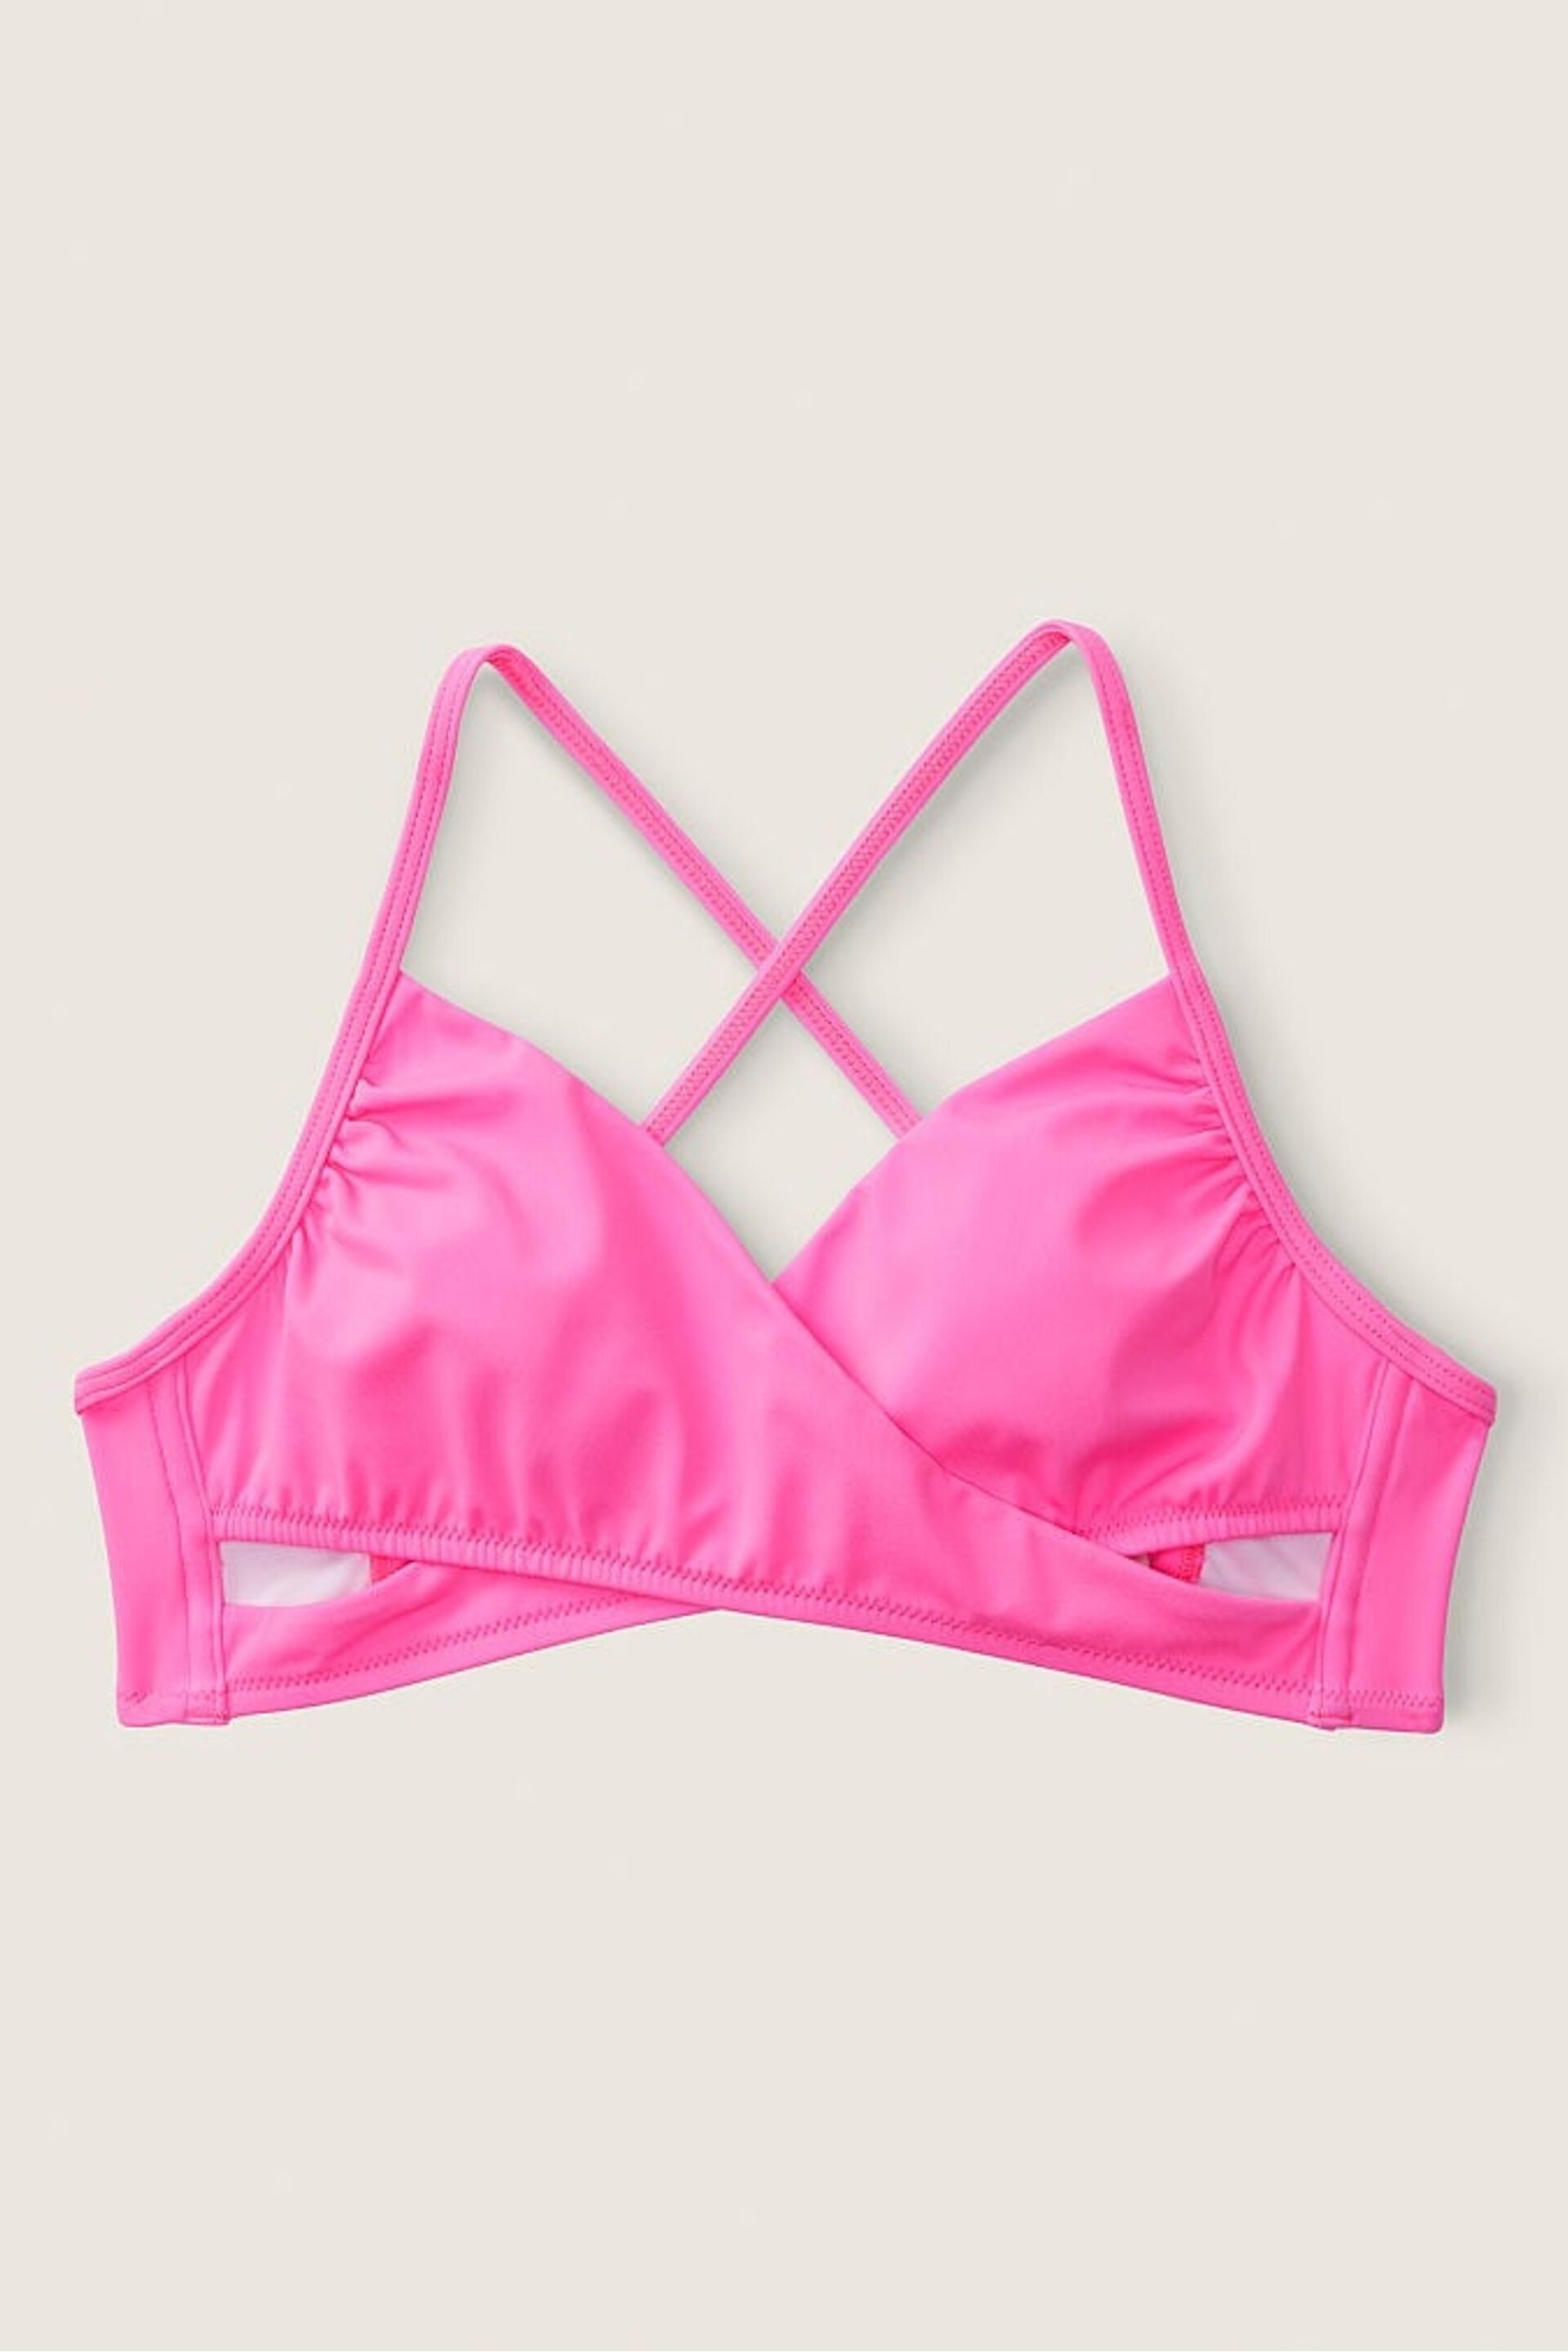 Victoria's Secret PINK Radiant Rose Pink Body Wrap Bikini Top - Image 4 of 4